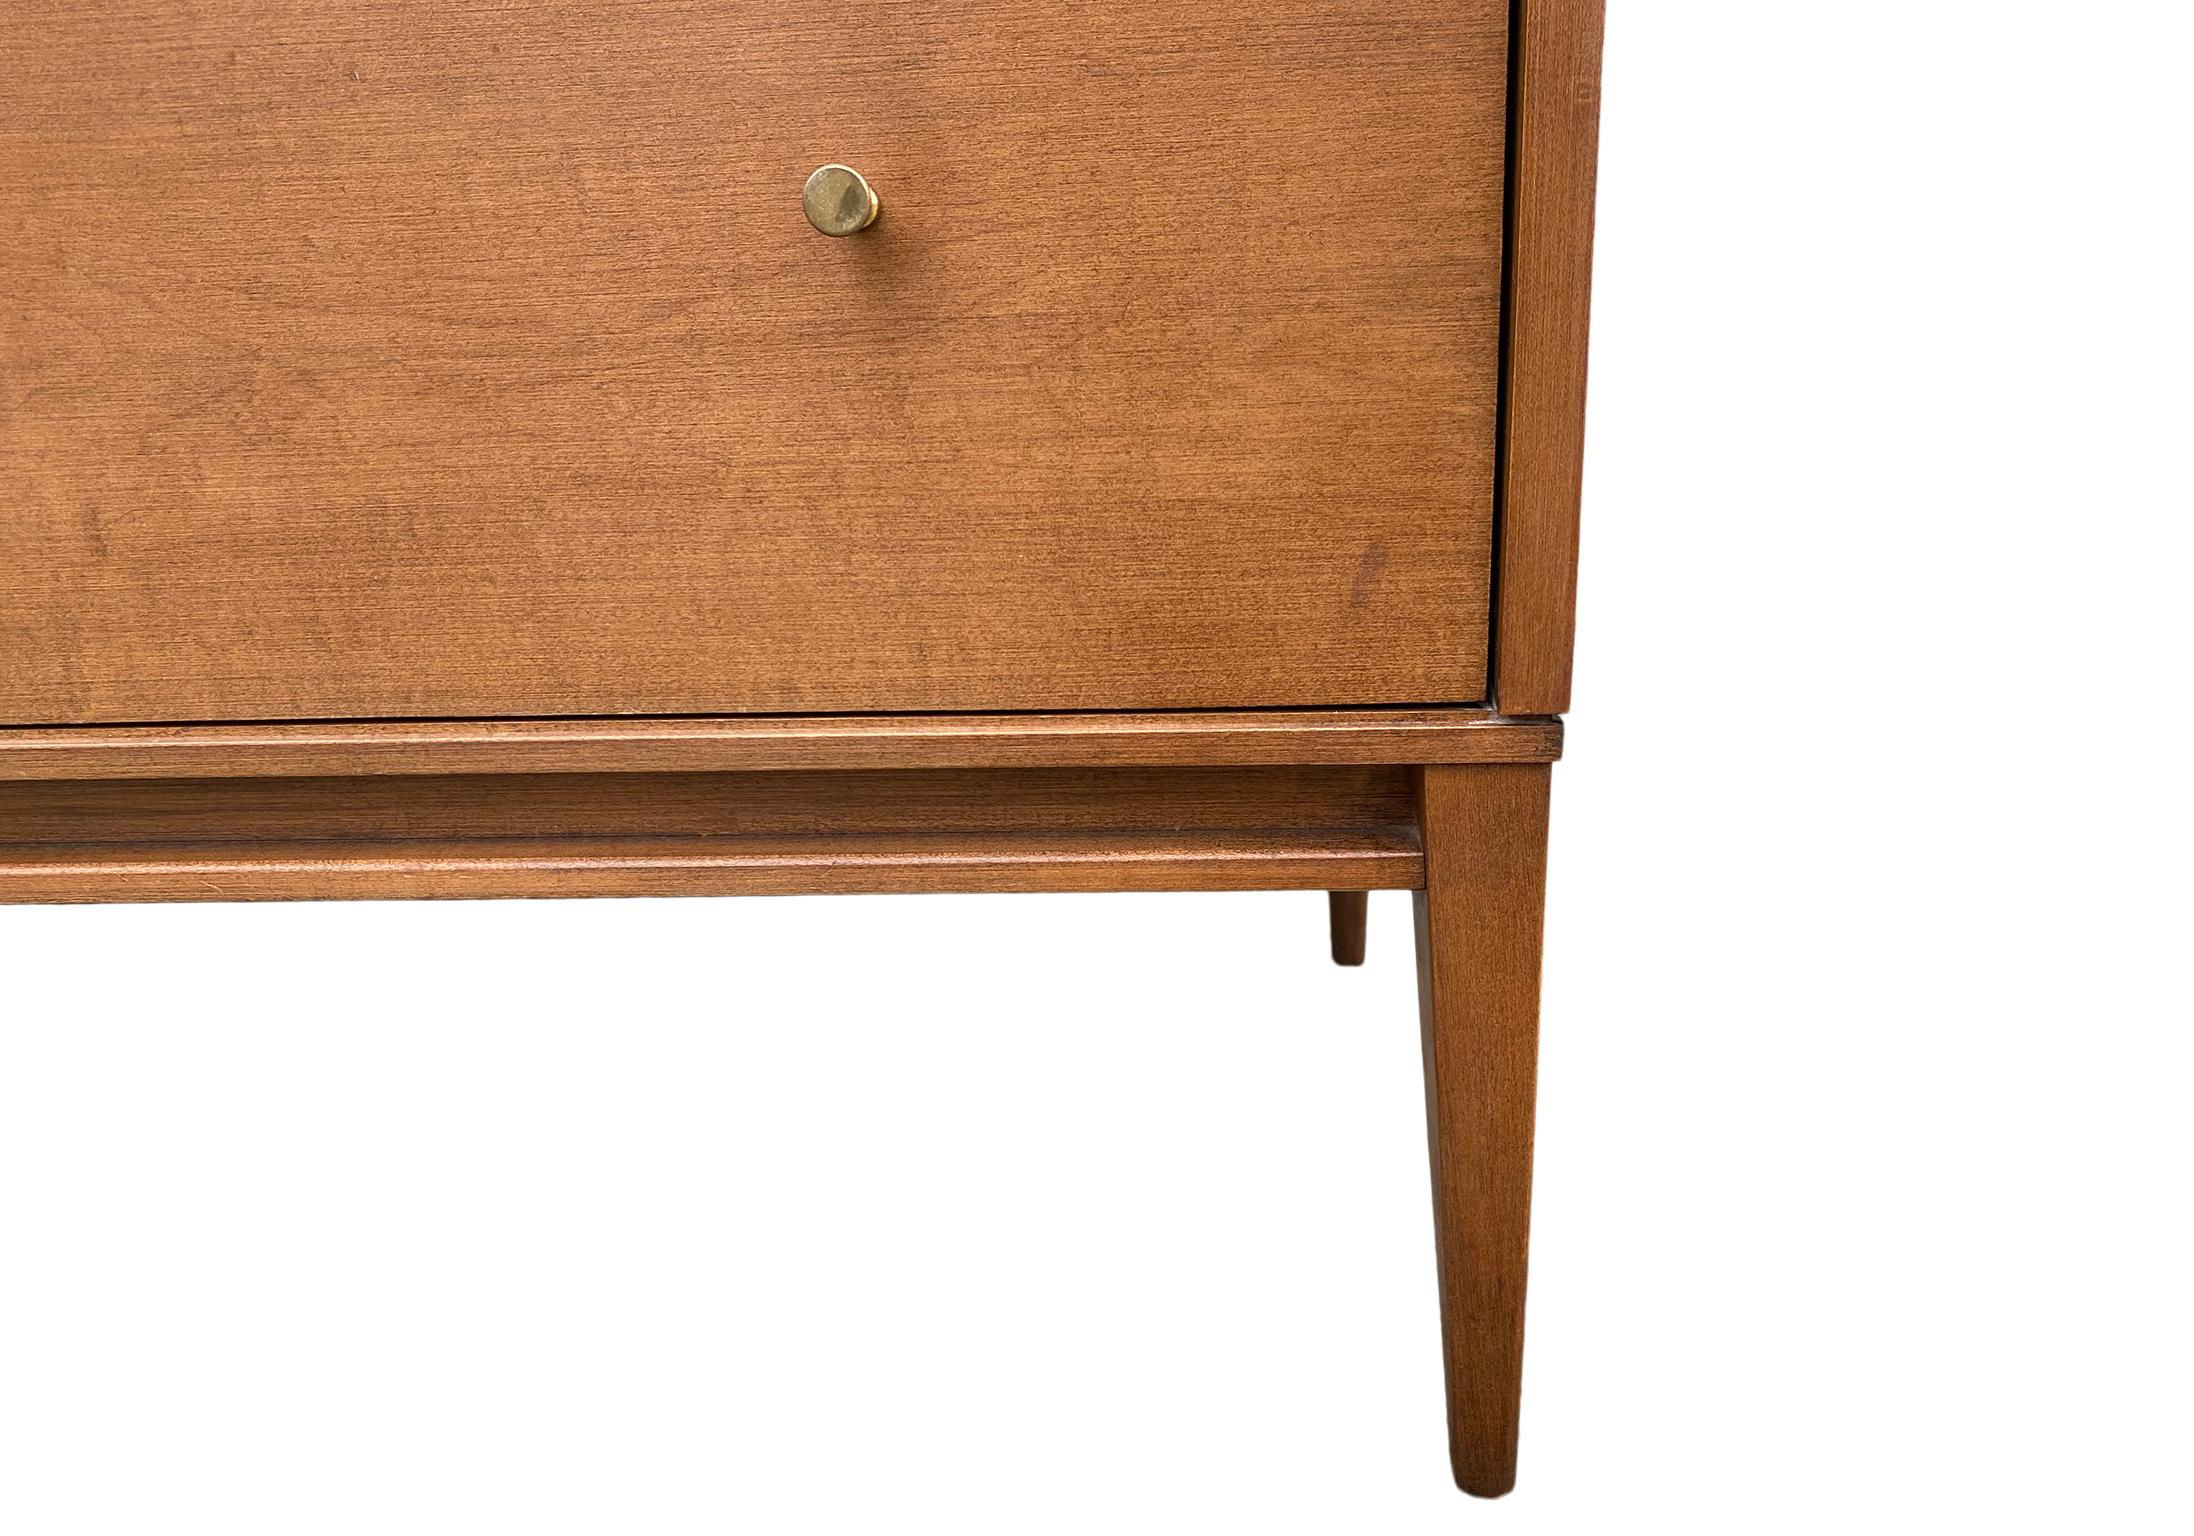 20th Century Midcentury Tall Dresser by Paul McCobb circa 1950 Planner Group #1501 Walnut